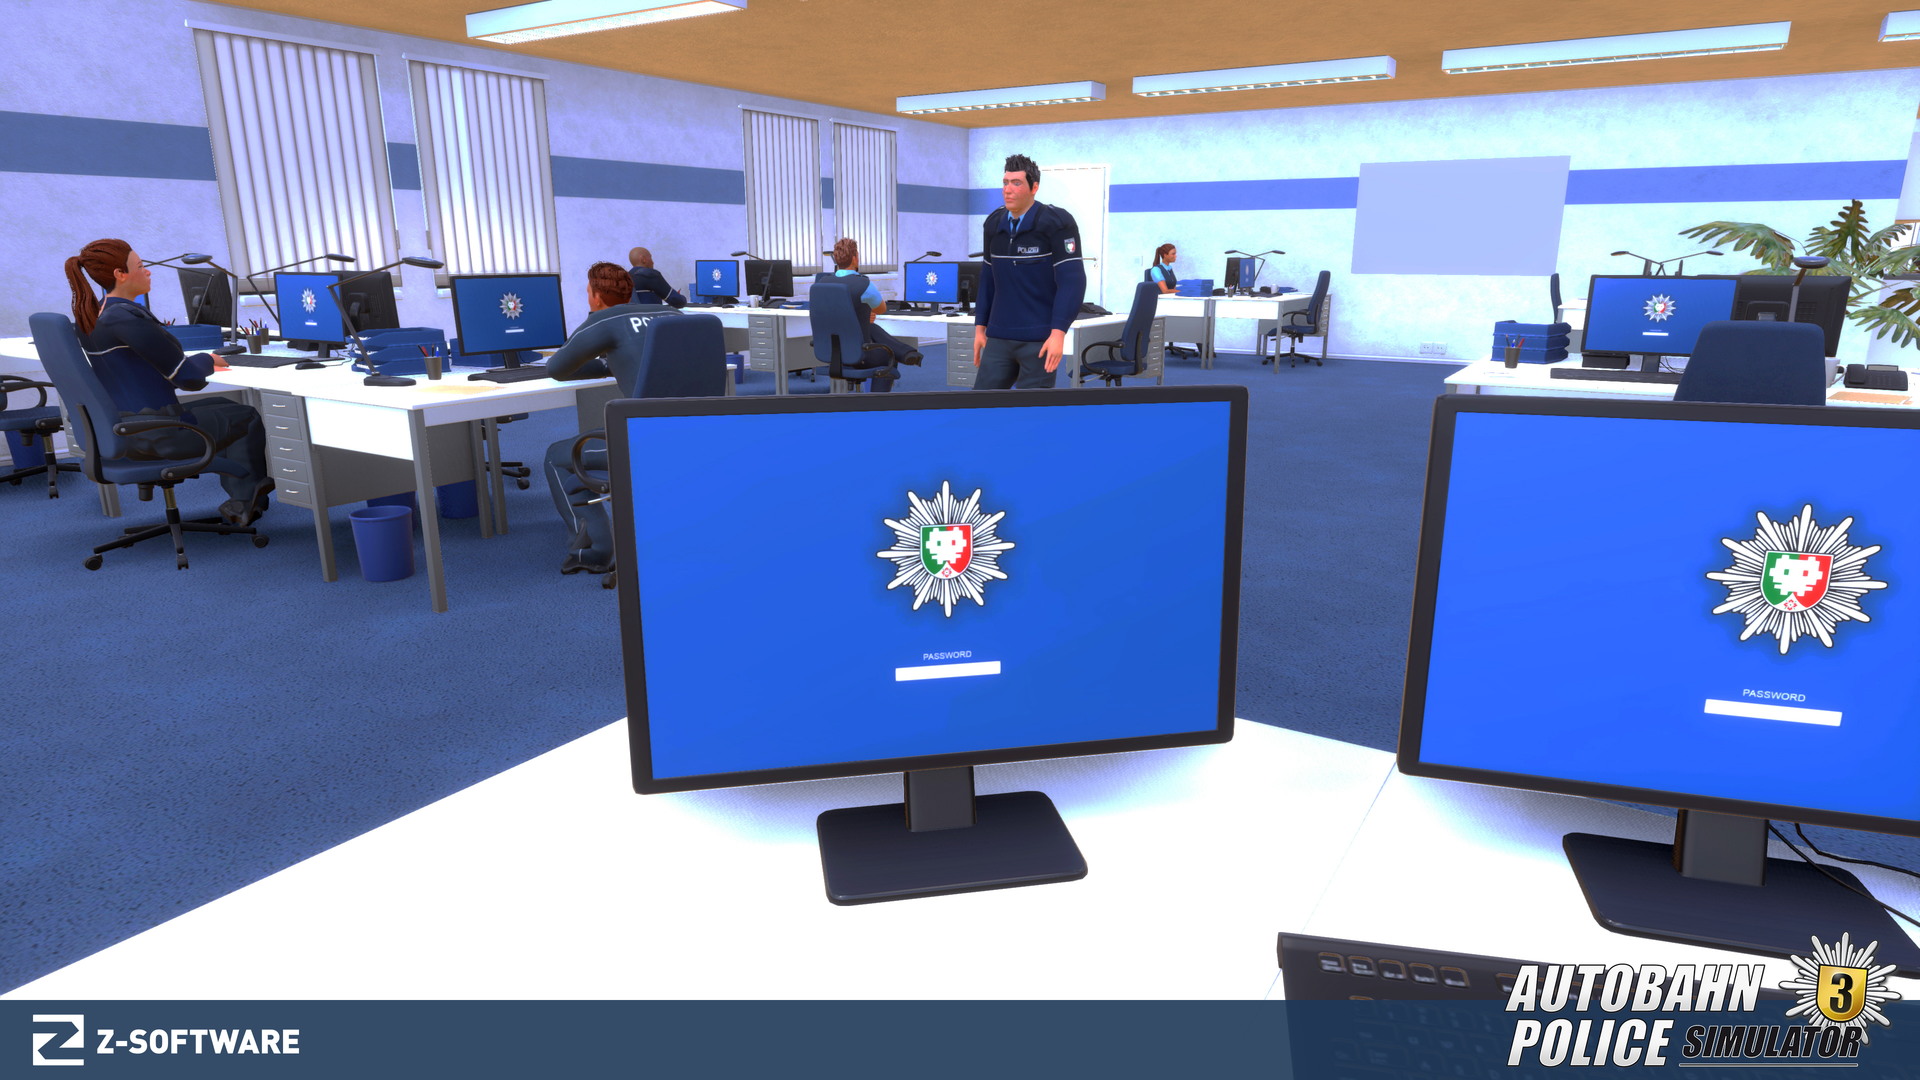 Autobahn Police Simulator 3 - screenshot 13